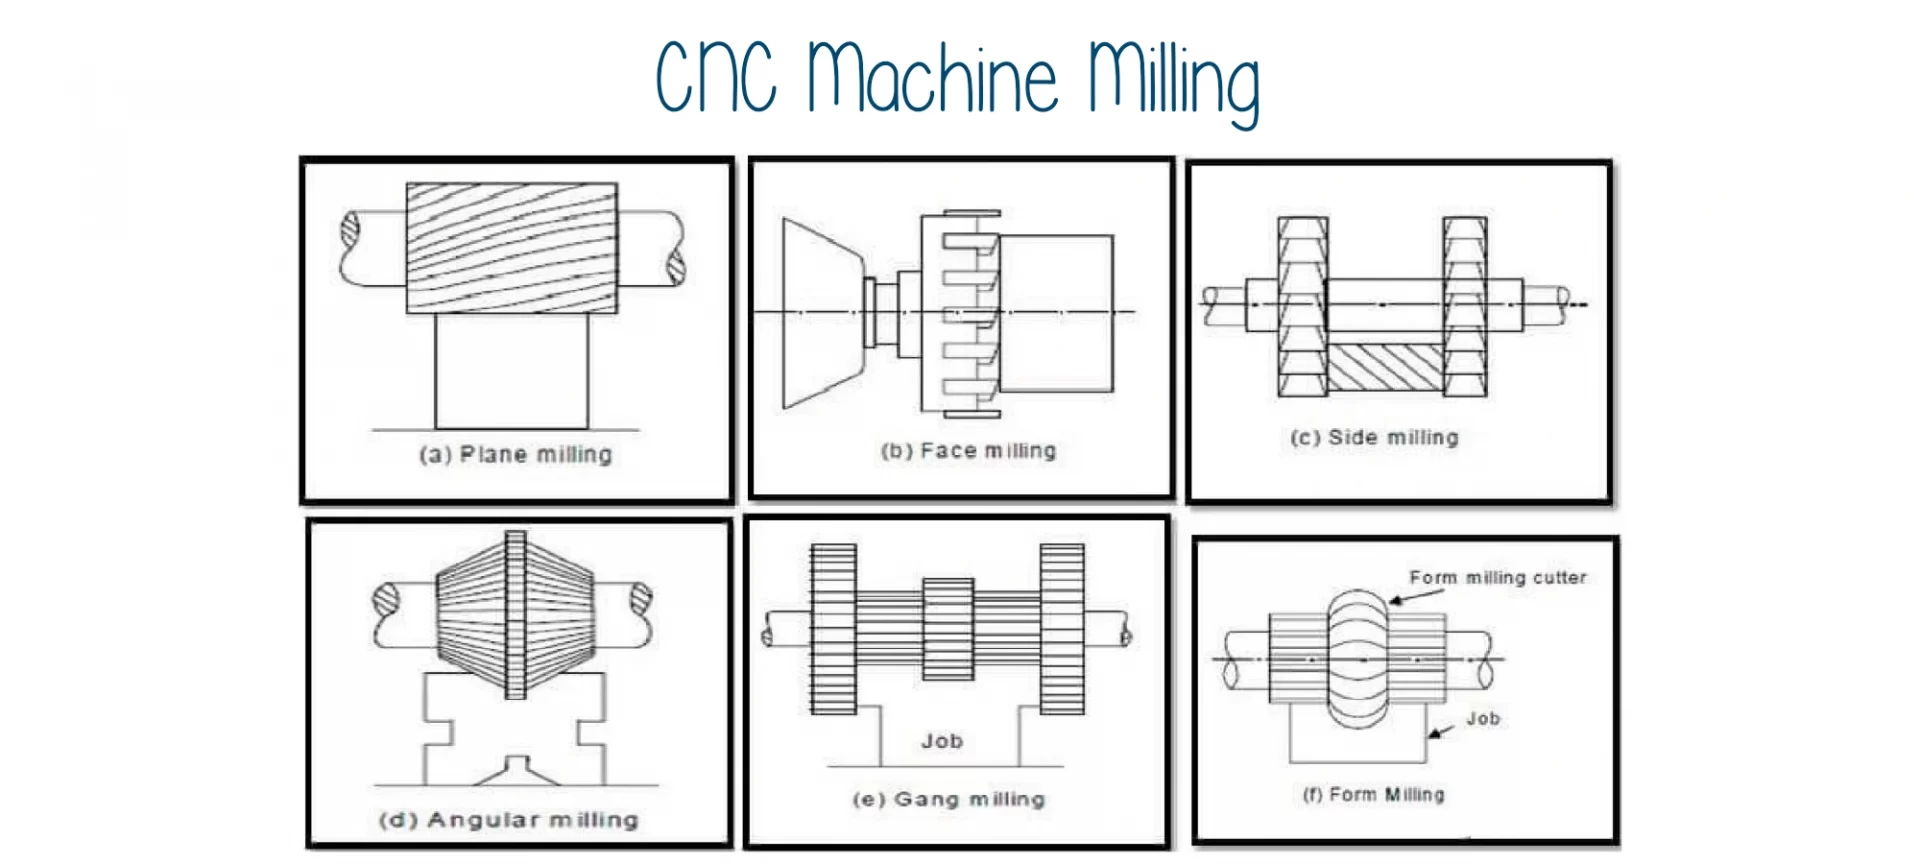 CNC machine milling